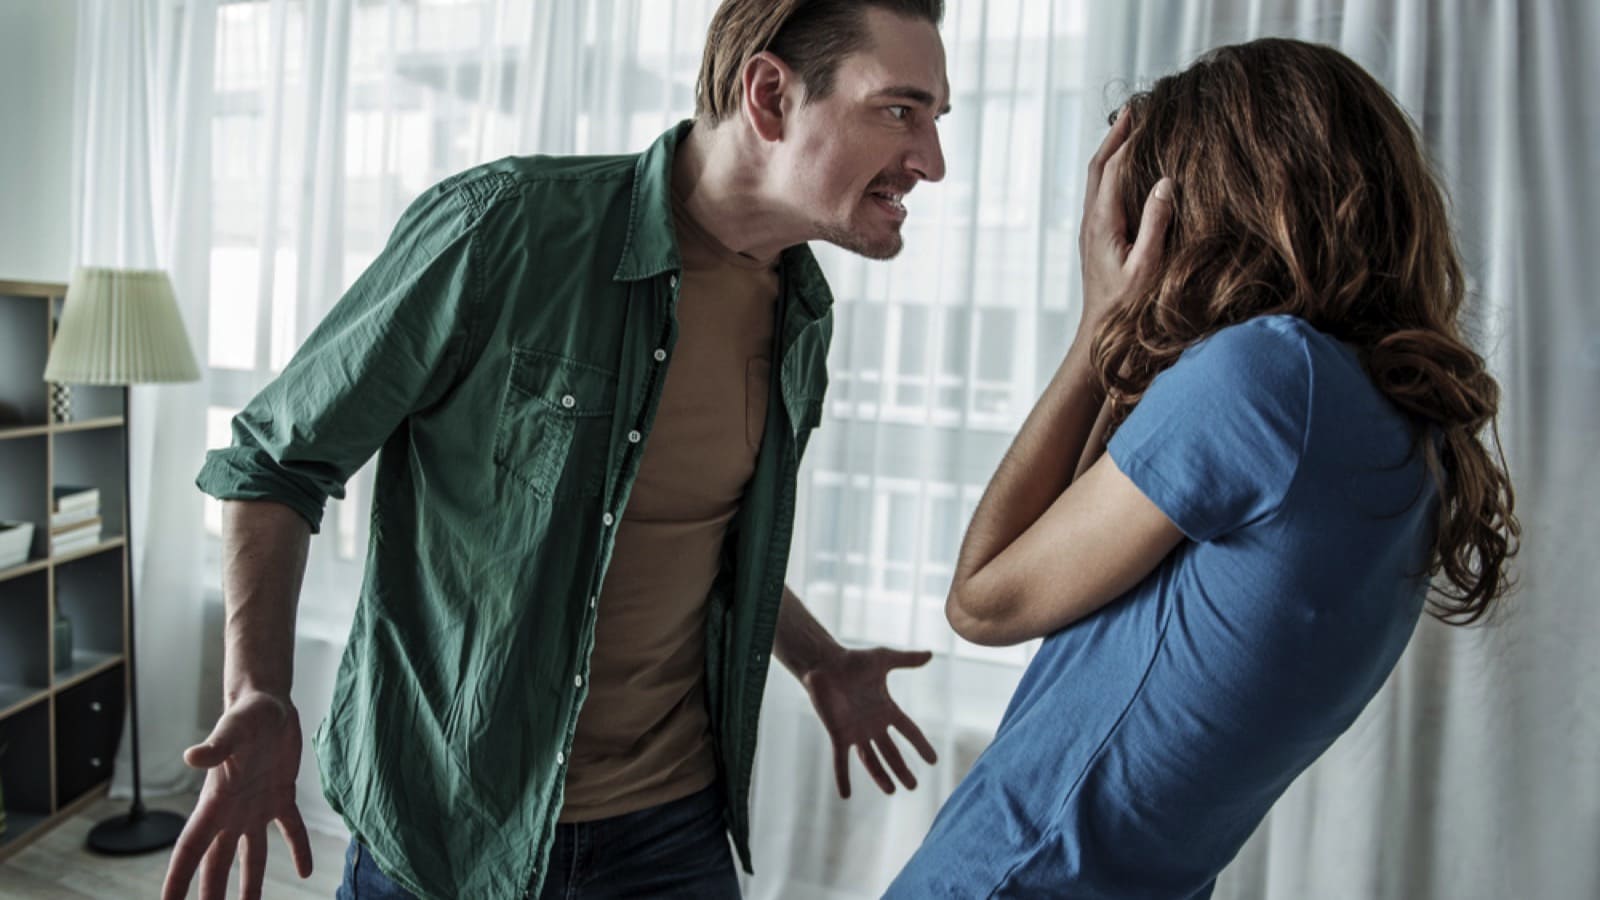 Irritated husband abusing woman